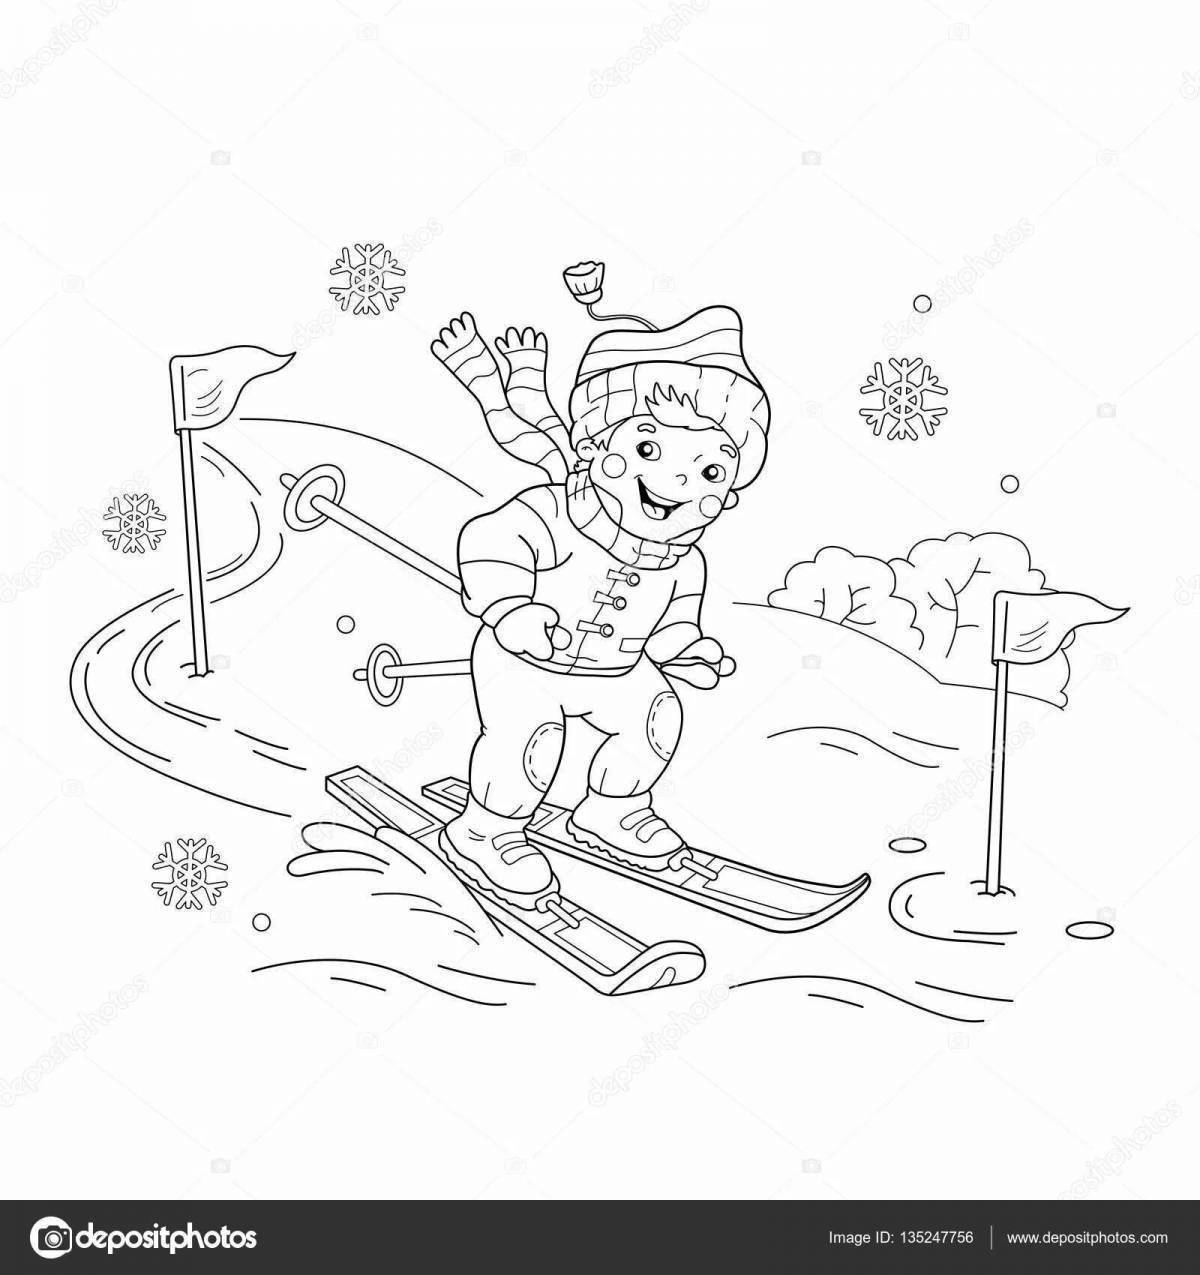 Adventurous skier coloring for kids